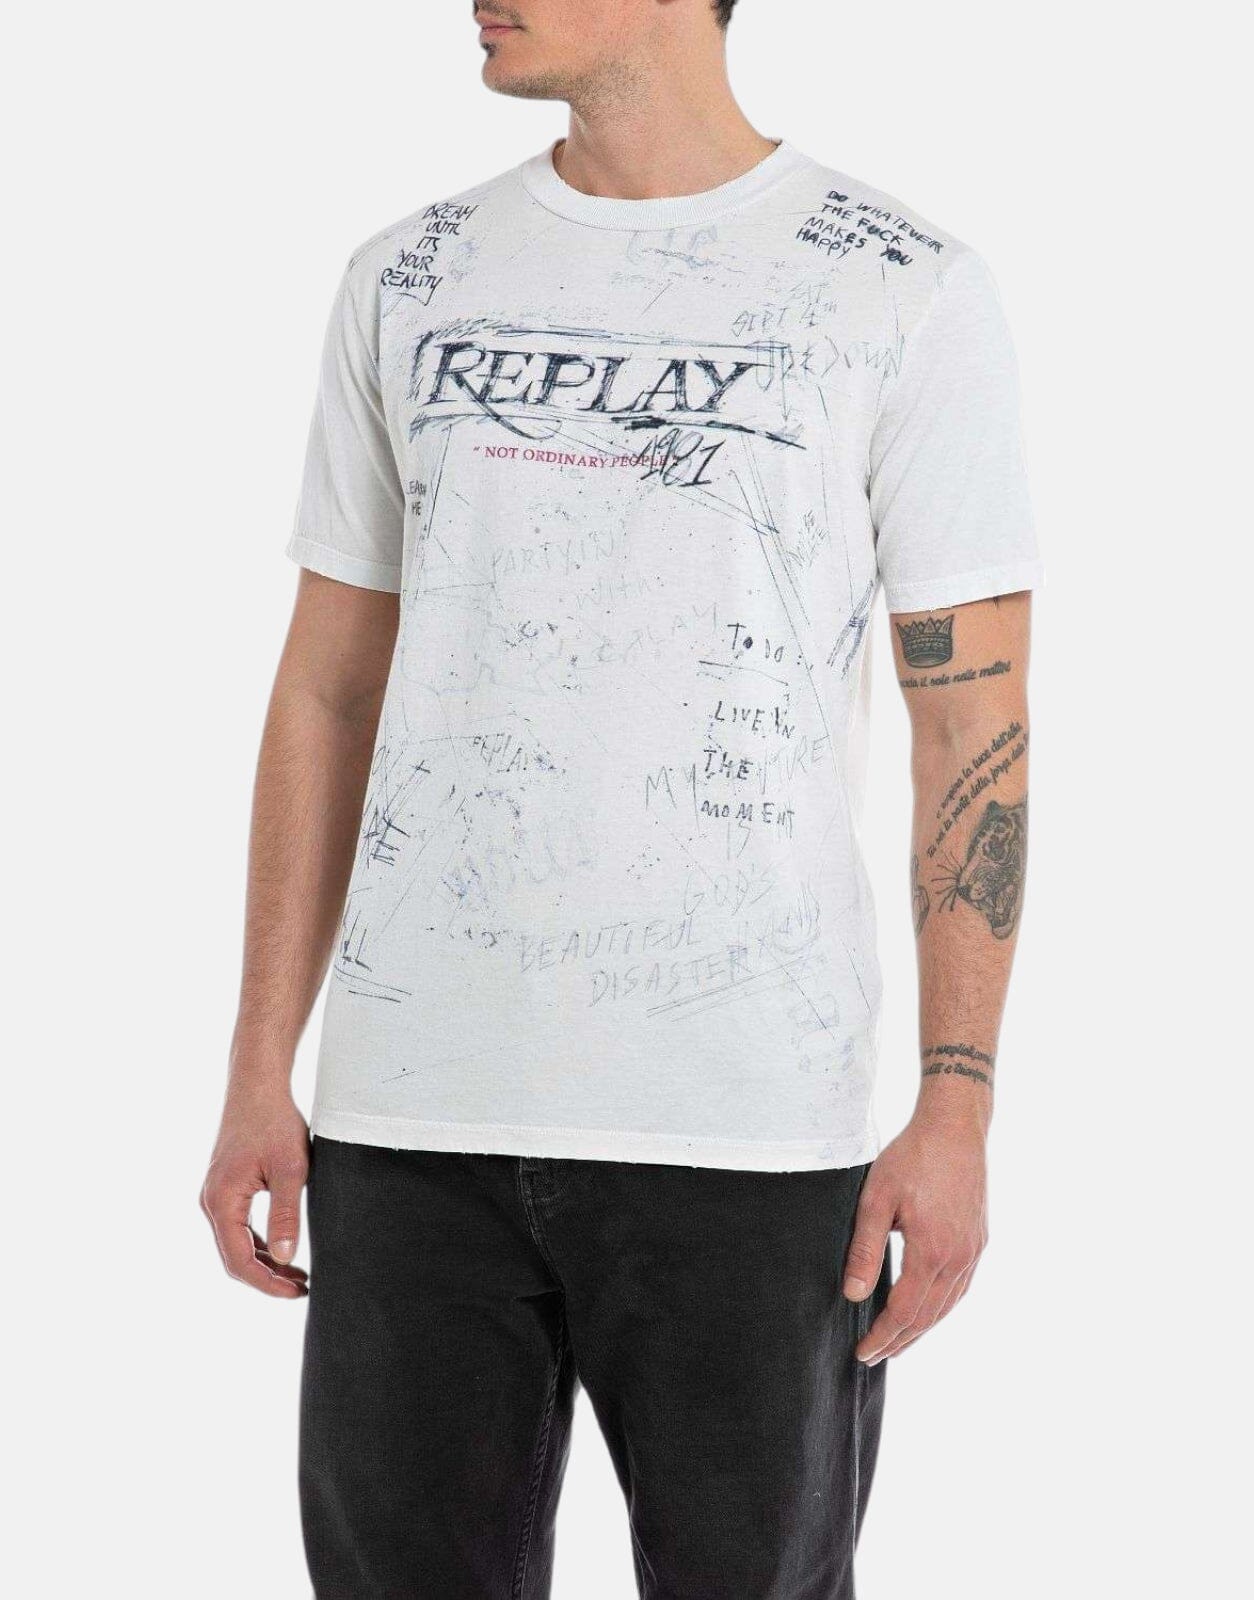 Replay Sketch Chalk Printed T-Shirt White - Subwear